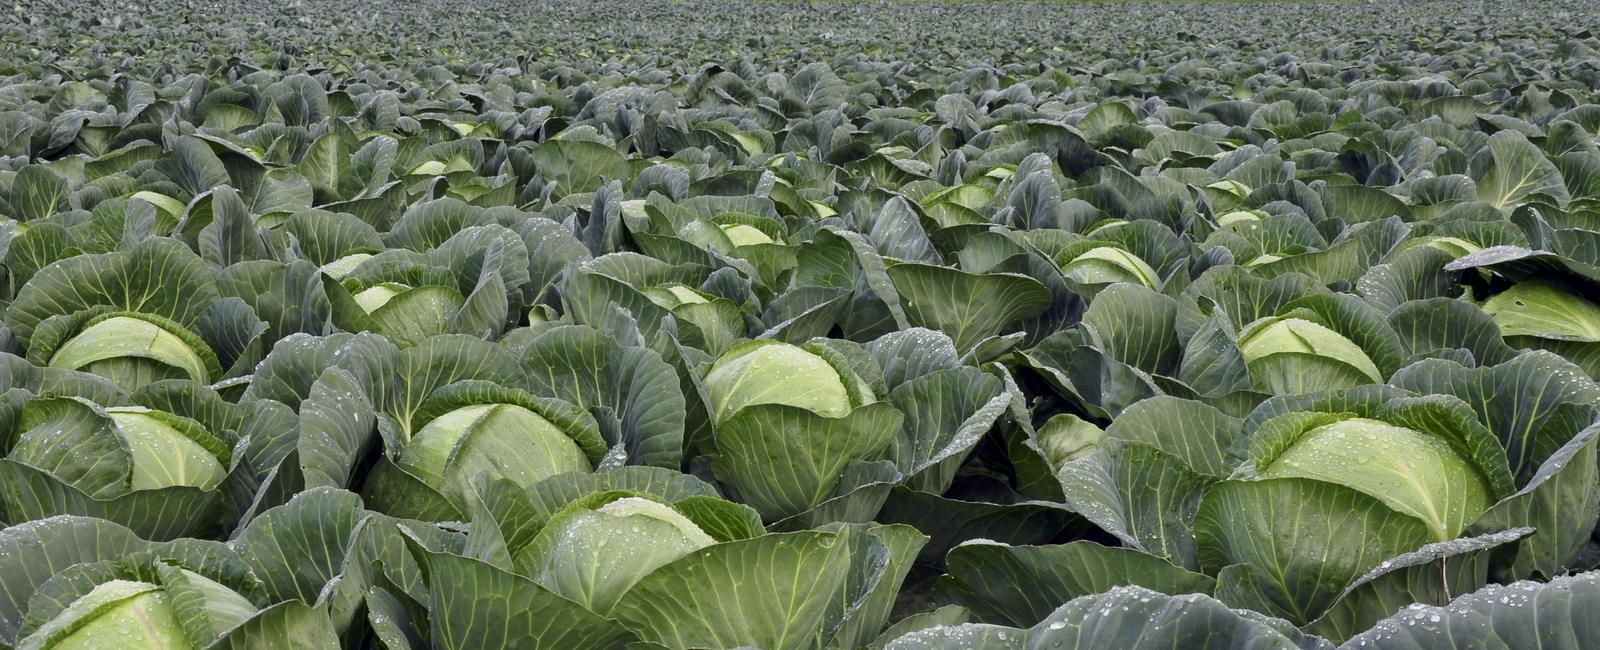 Cabbage crop nutrition